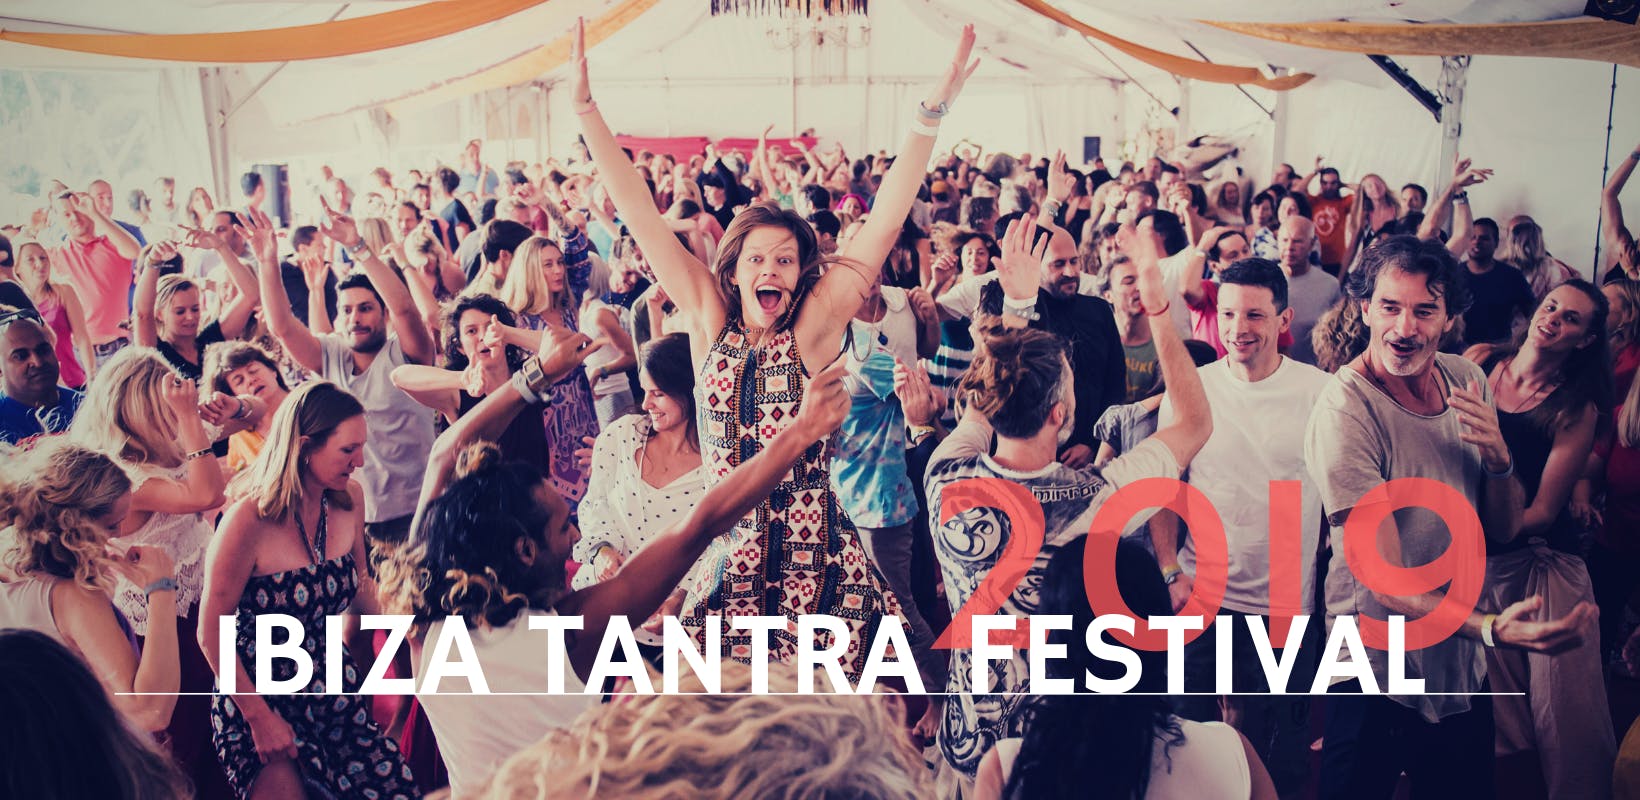 Ibiza Tantra Festival 2019 21 Oct 2019